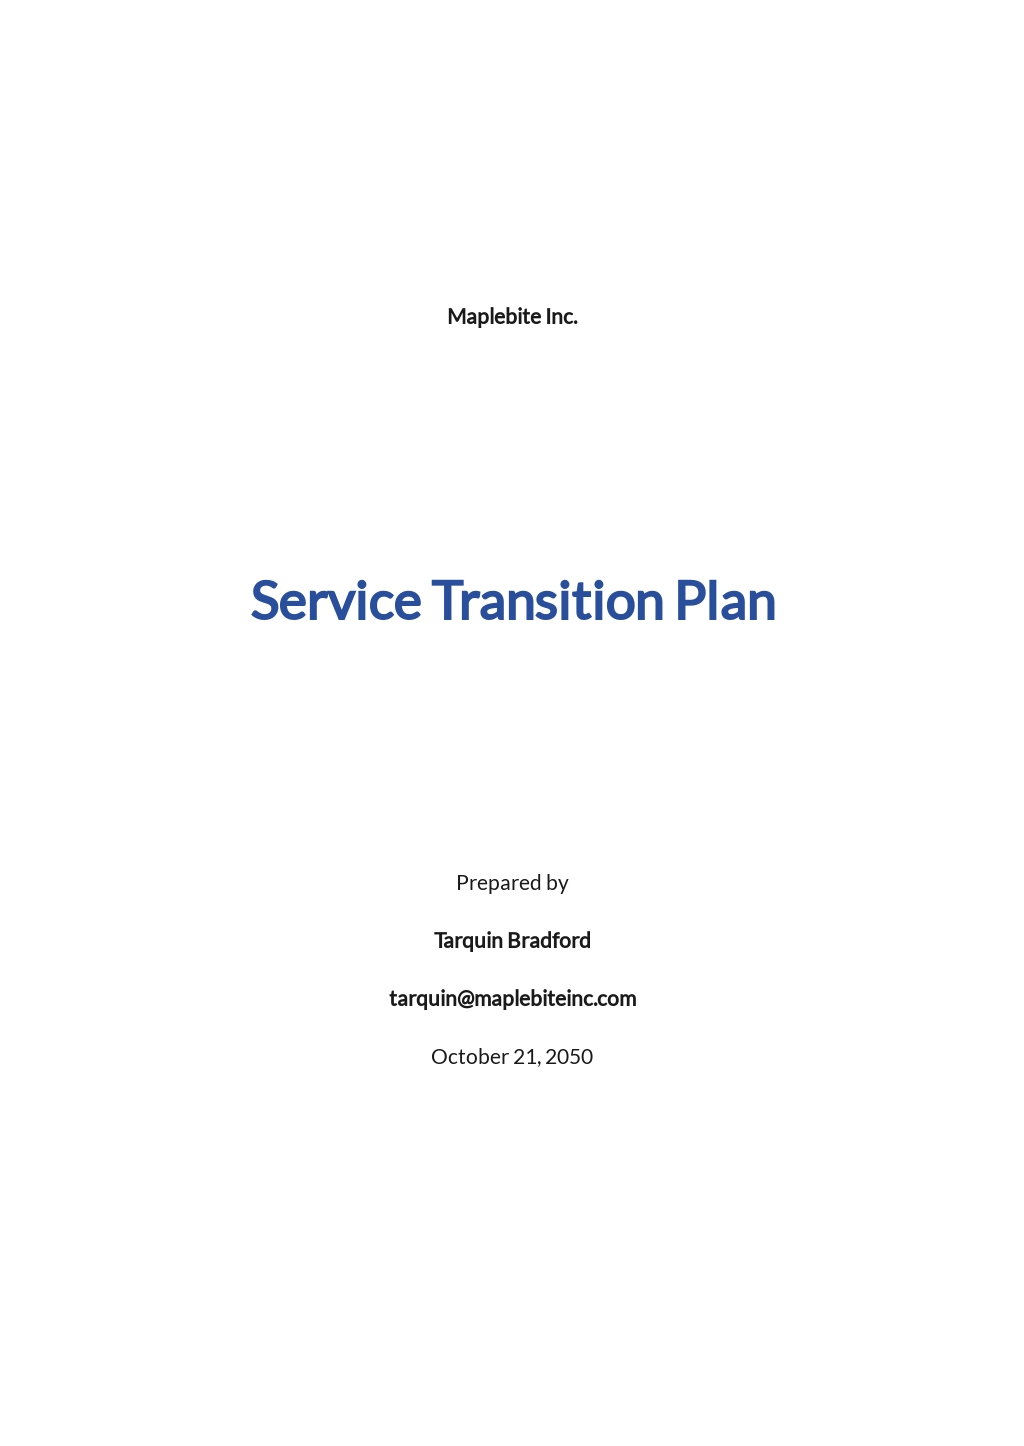 Service Transition Plan Template.jpe